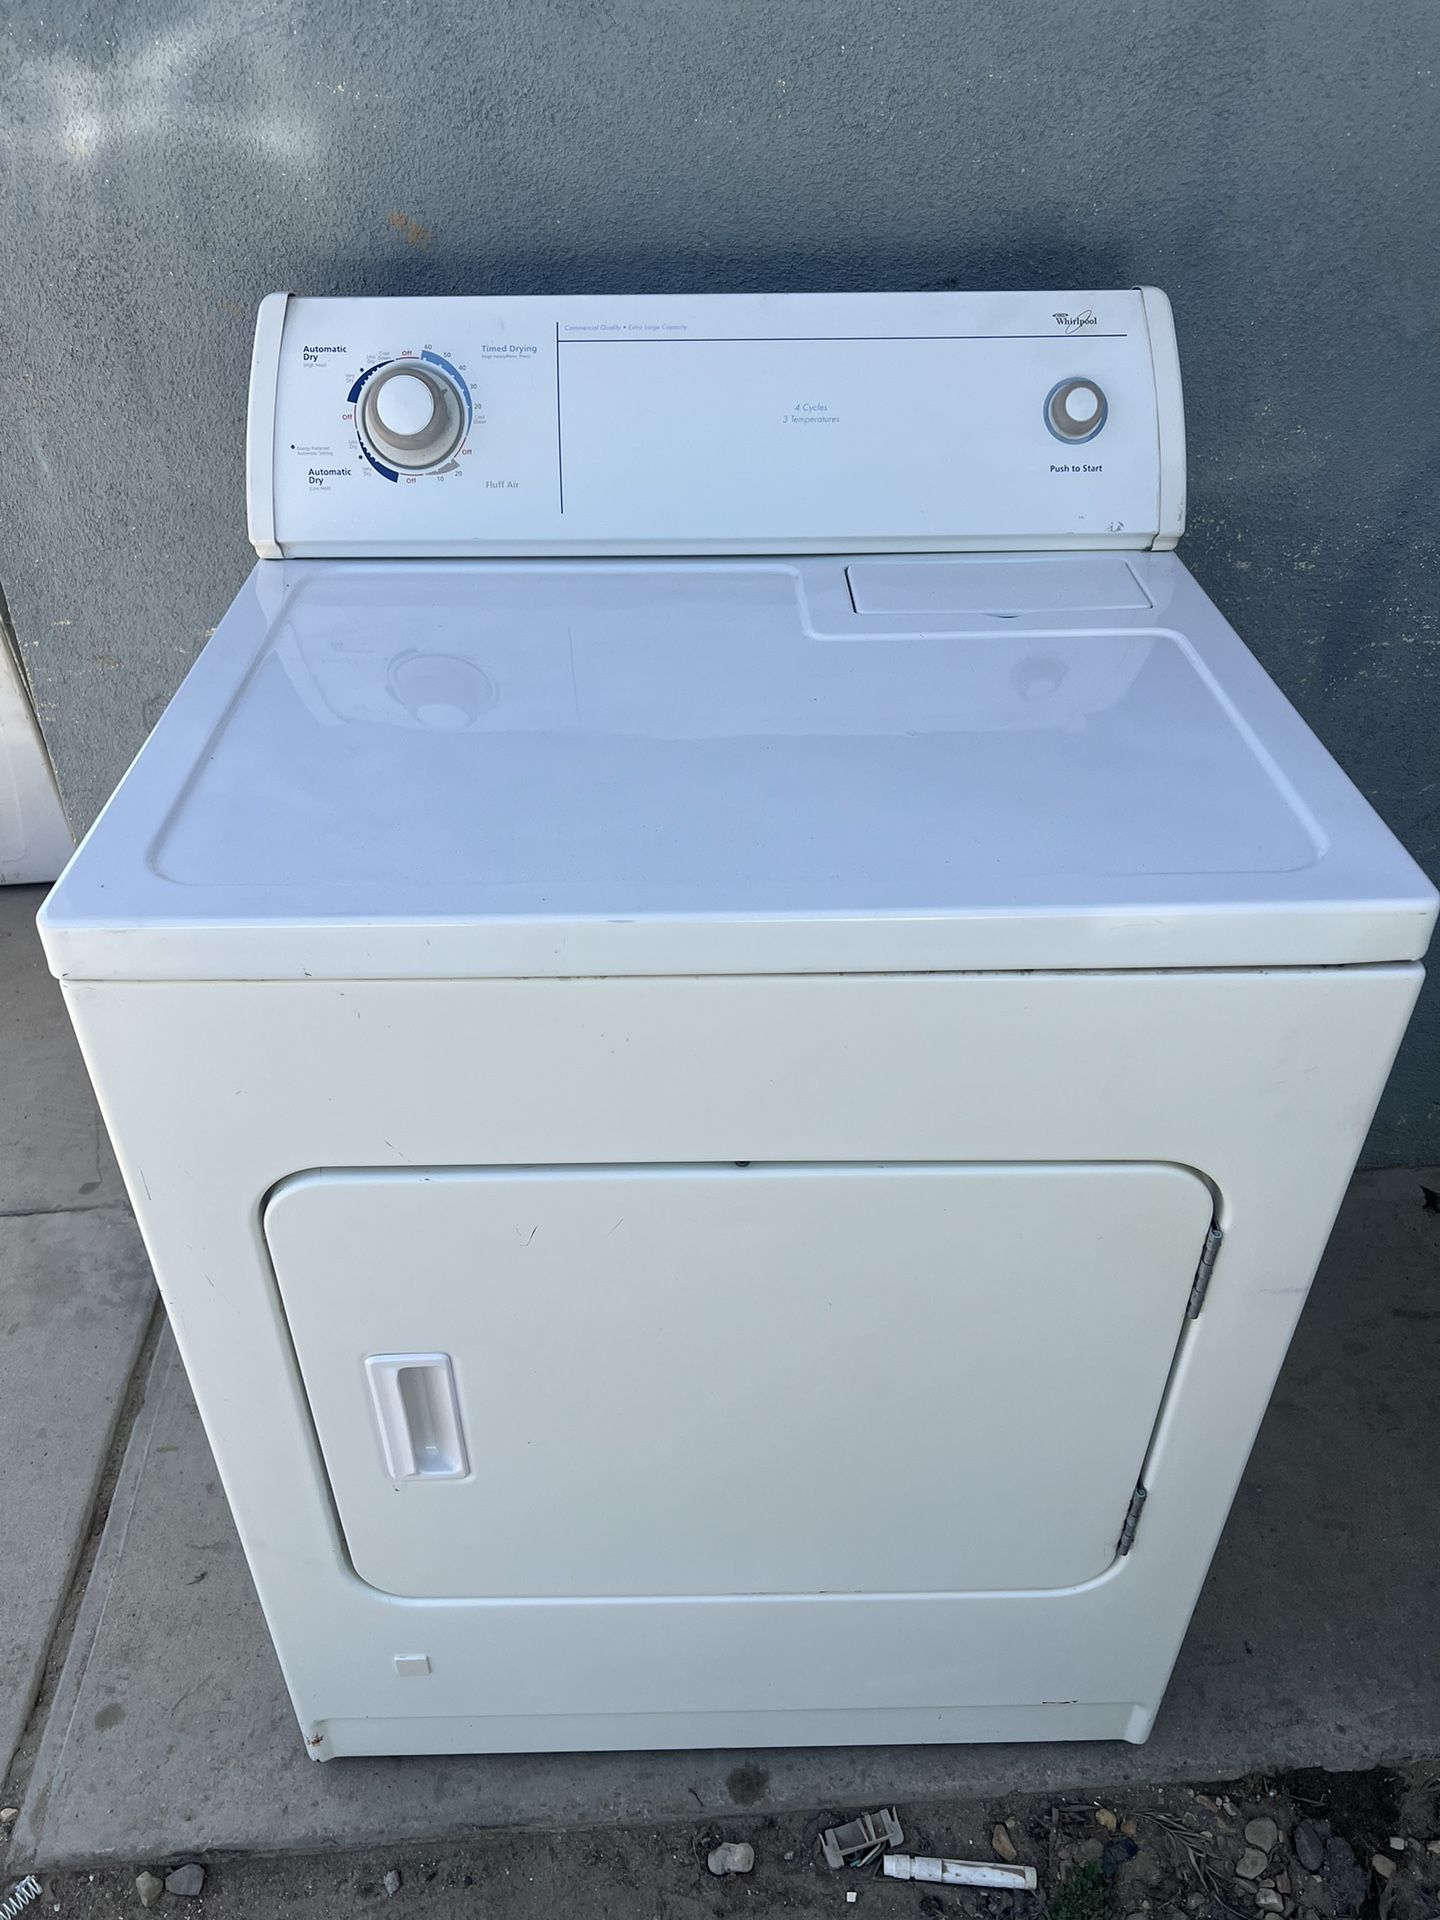 Whirlpool Gas Dryer 